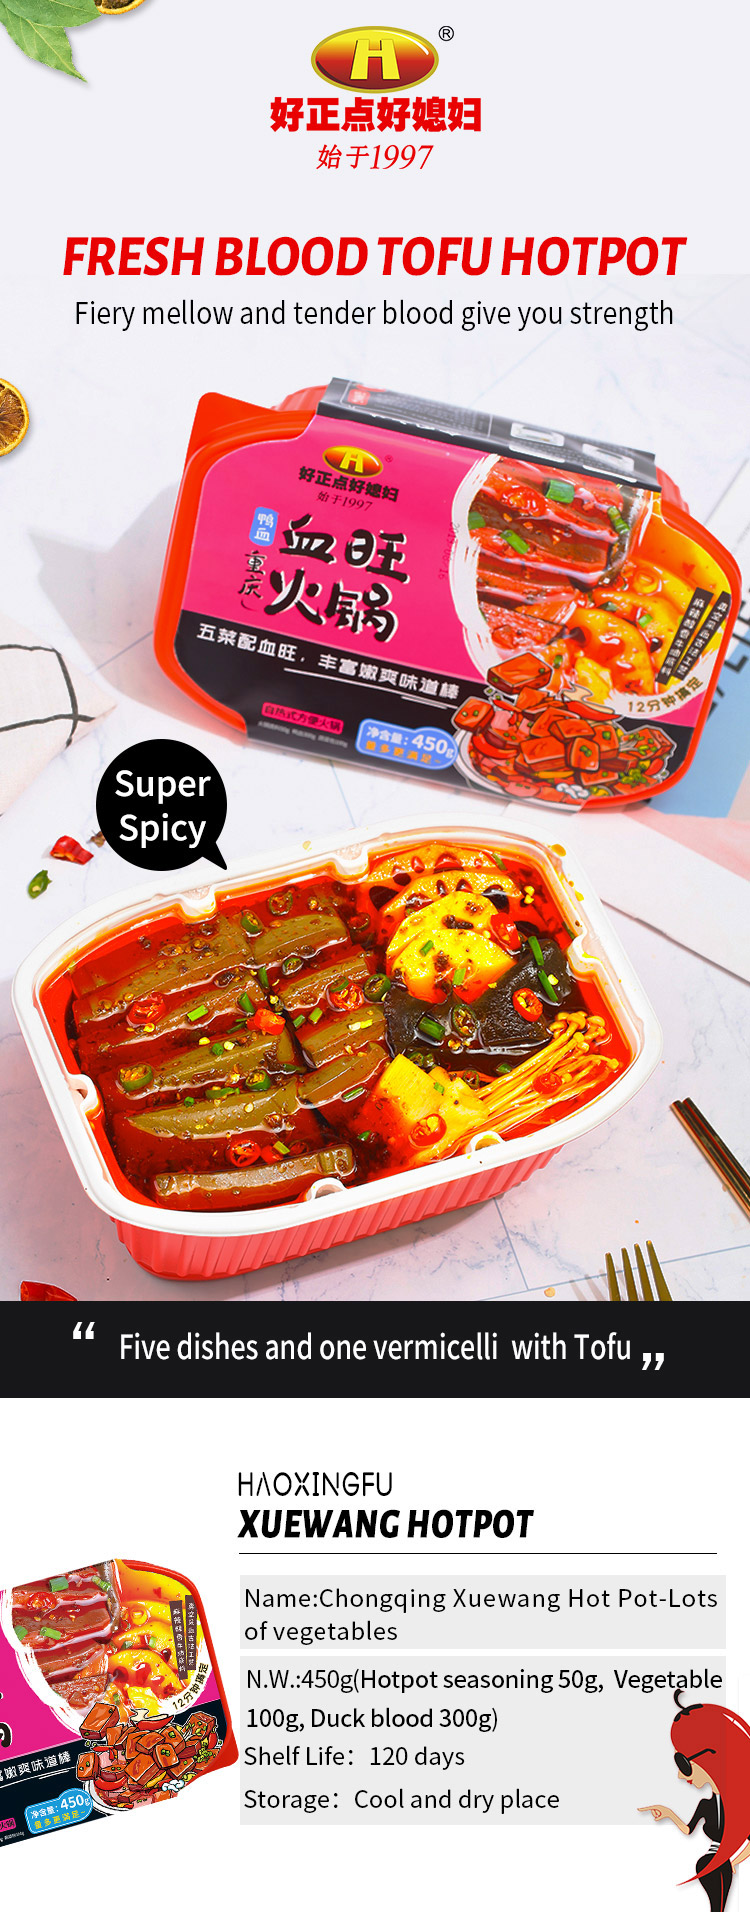 Factory Price Tasty Spicy Flavor Haidilao Instant Food Self Heating Tofu Lazy Hotpot 450g